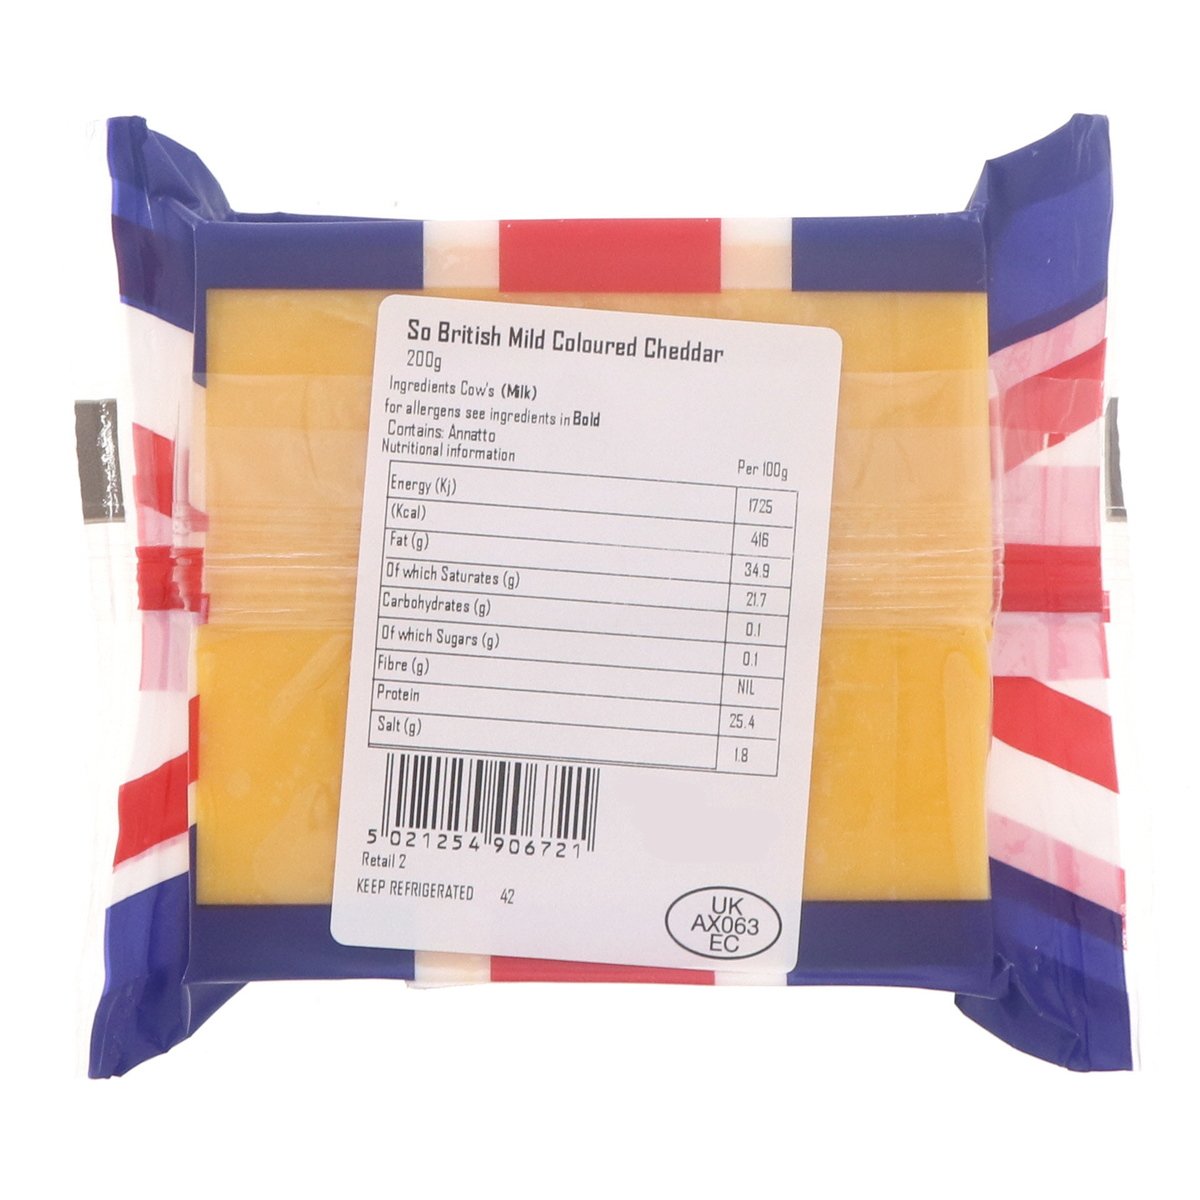 So British Mild Coloured Cheddar Cheese 200 g